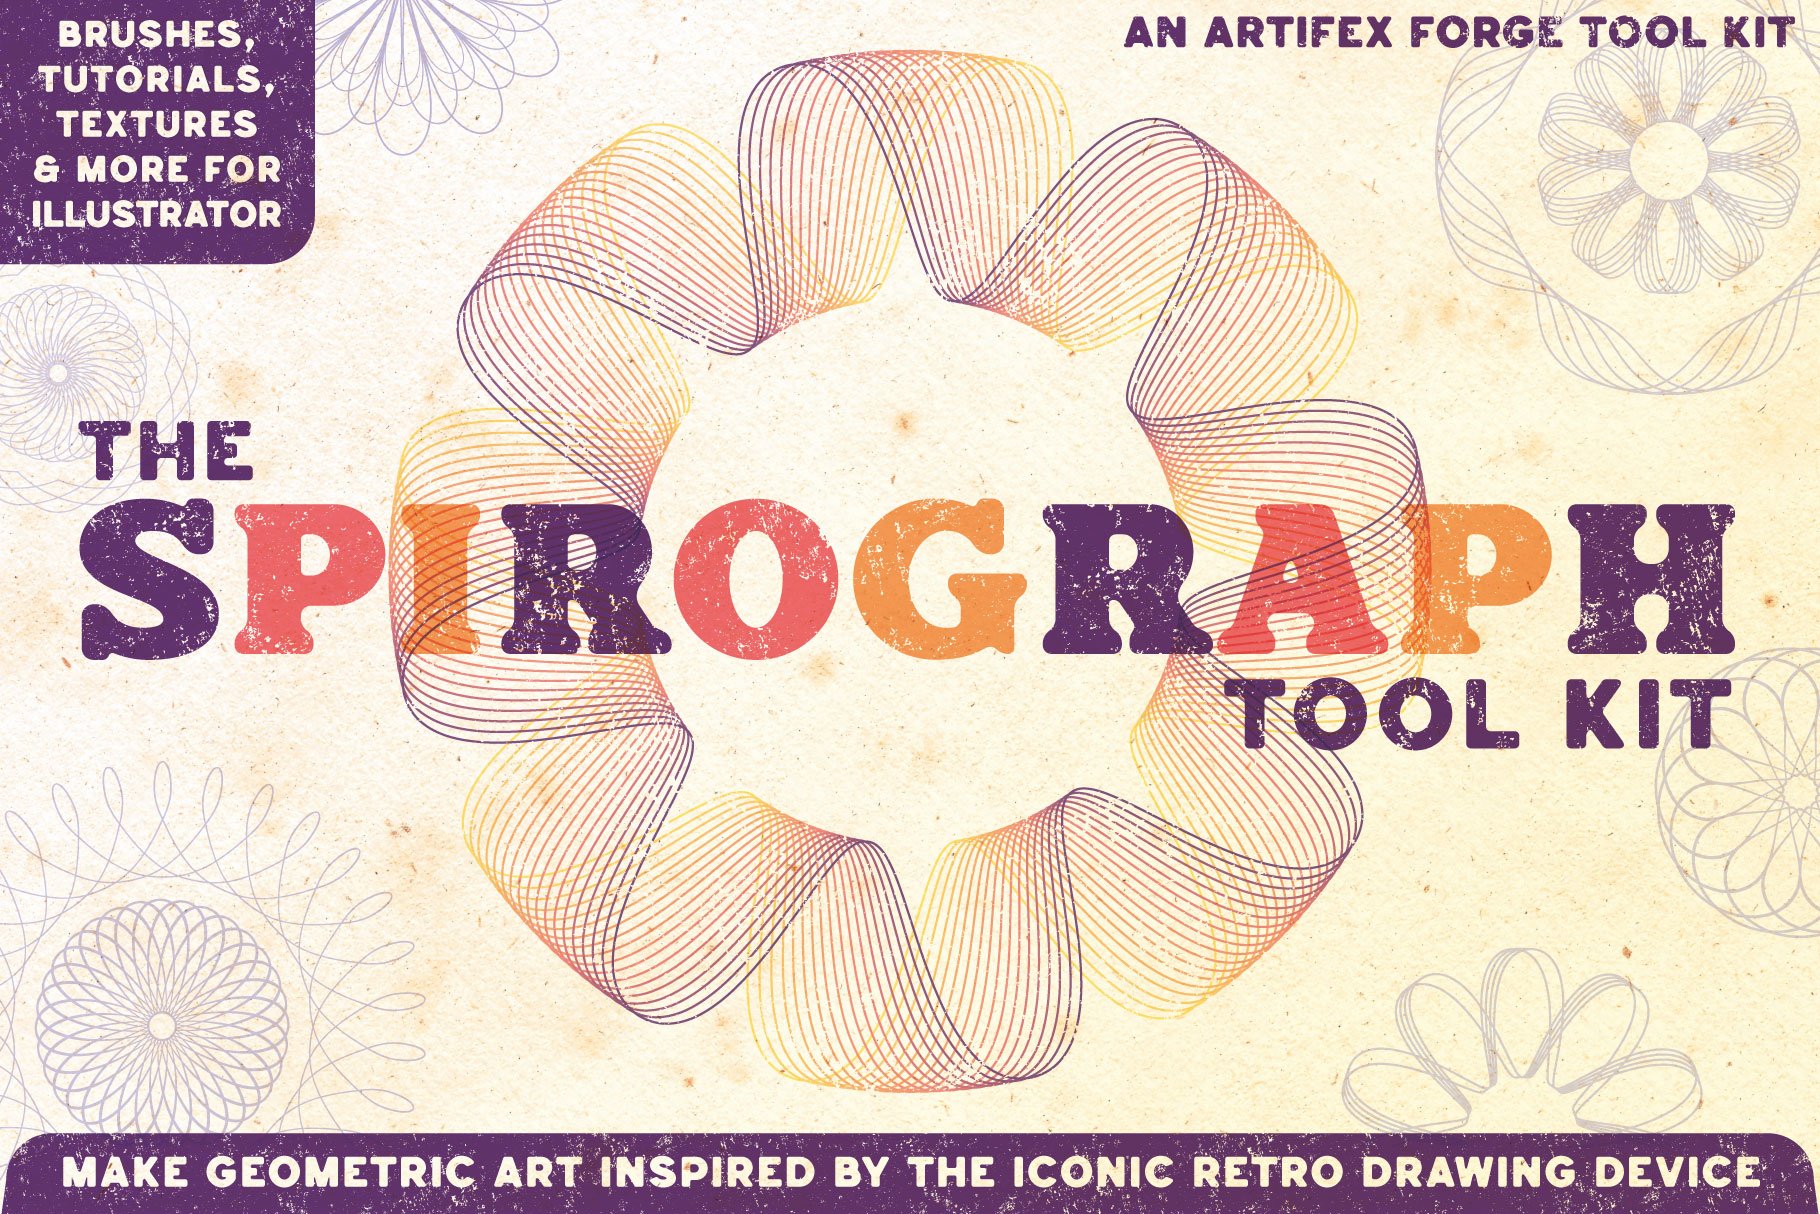 The Spirograph Tool Kit - Illustrator